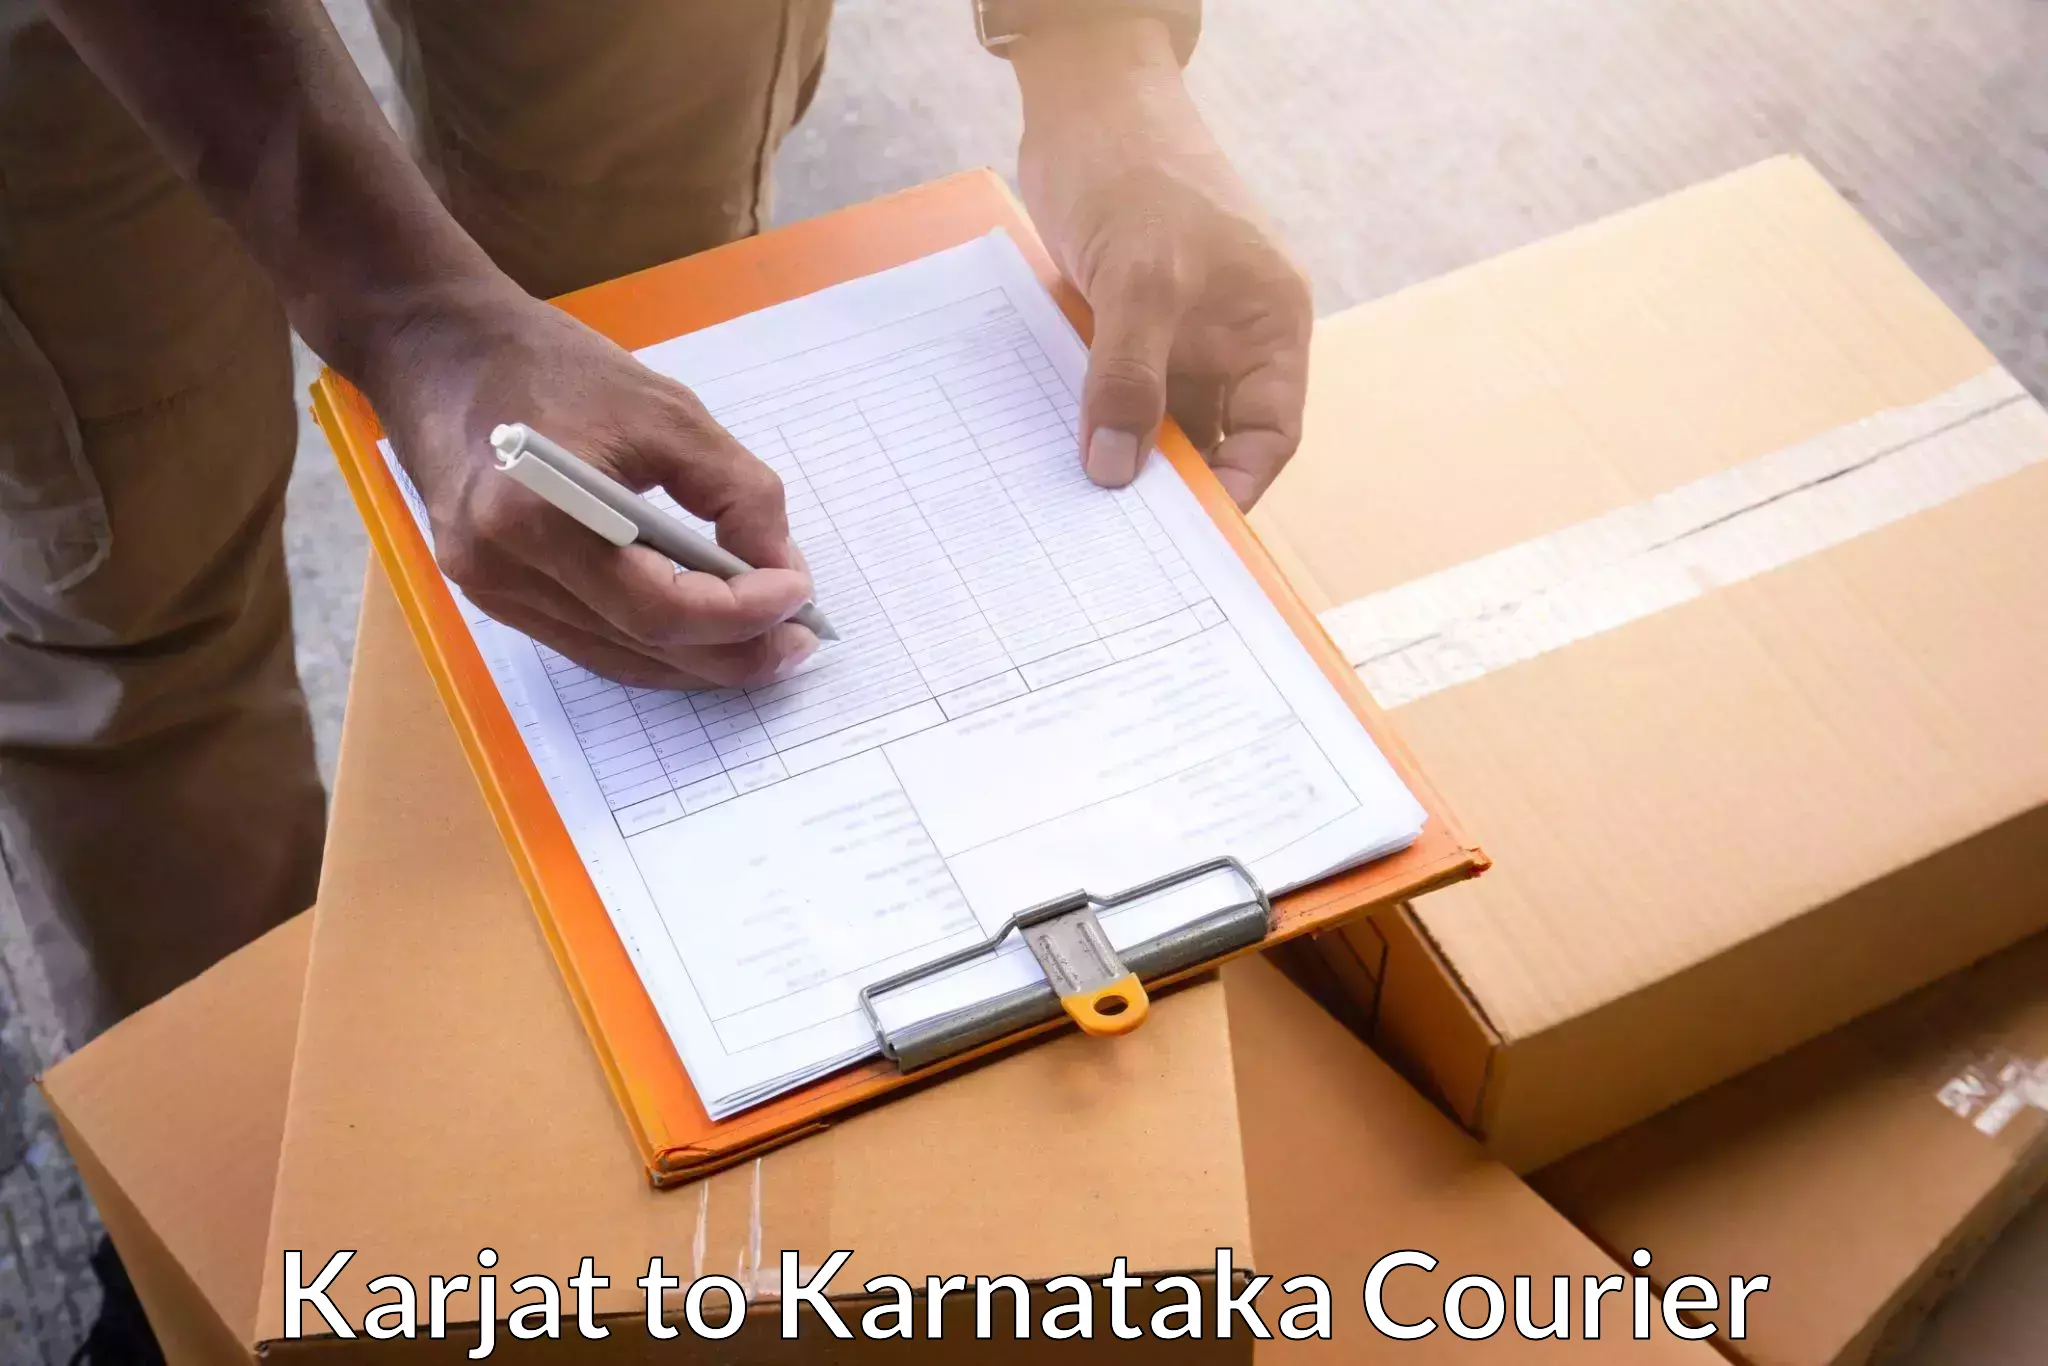 High-capacity parcel service Karjat to Karnataka